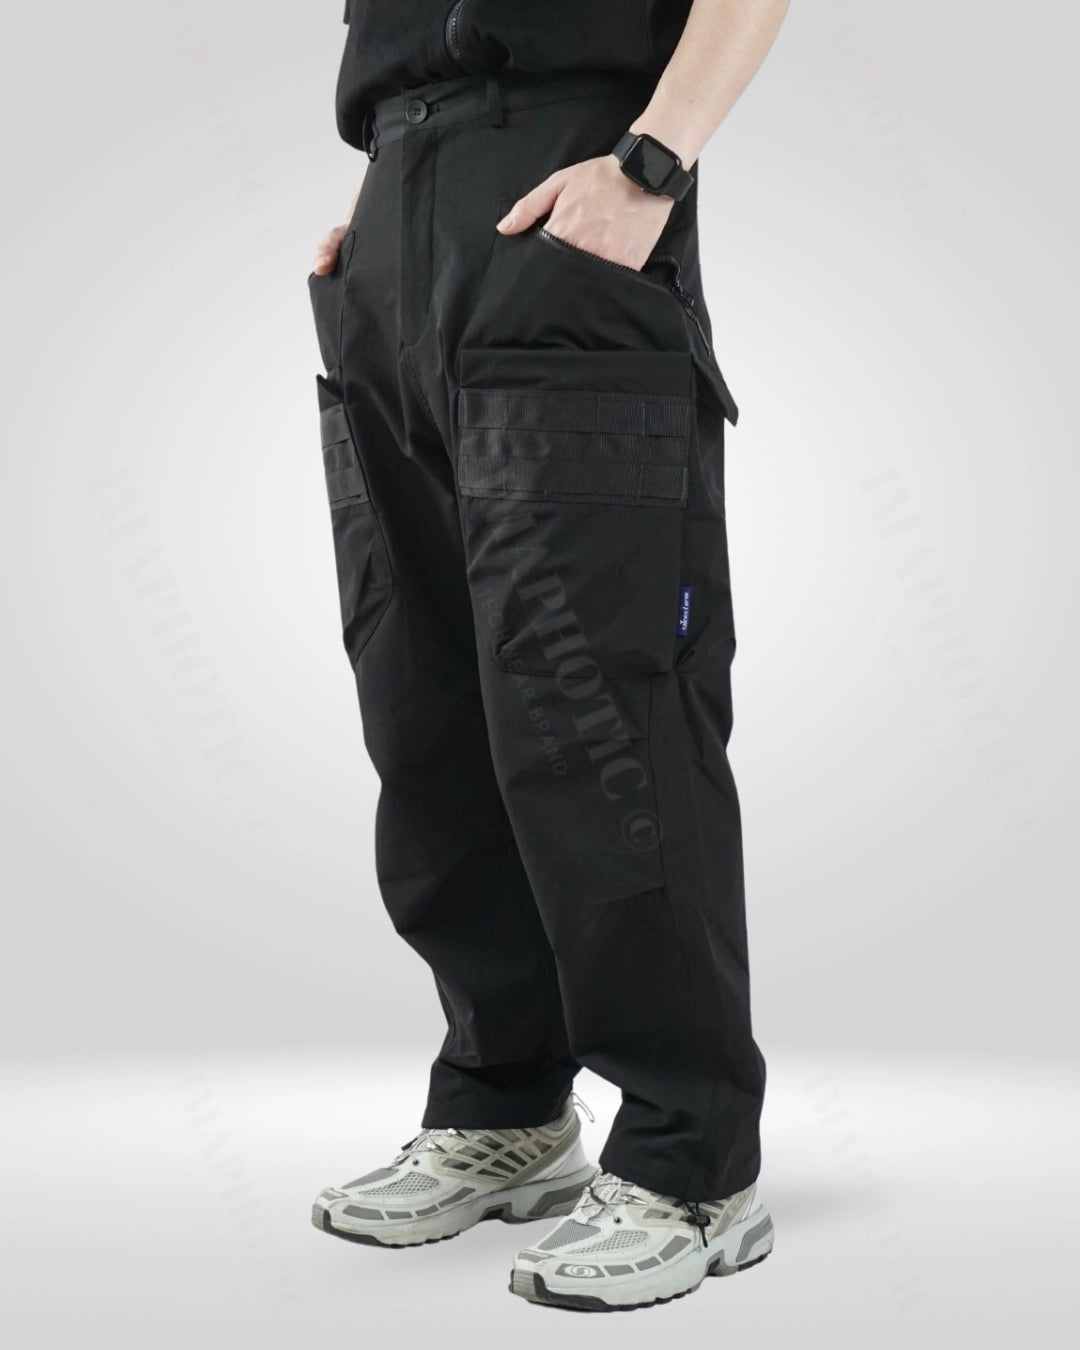 Versatile Black Baggy Cargo Pants - Tactical Waterproof & Stylish